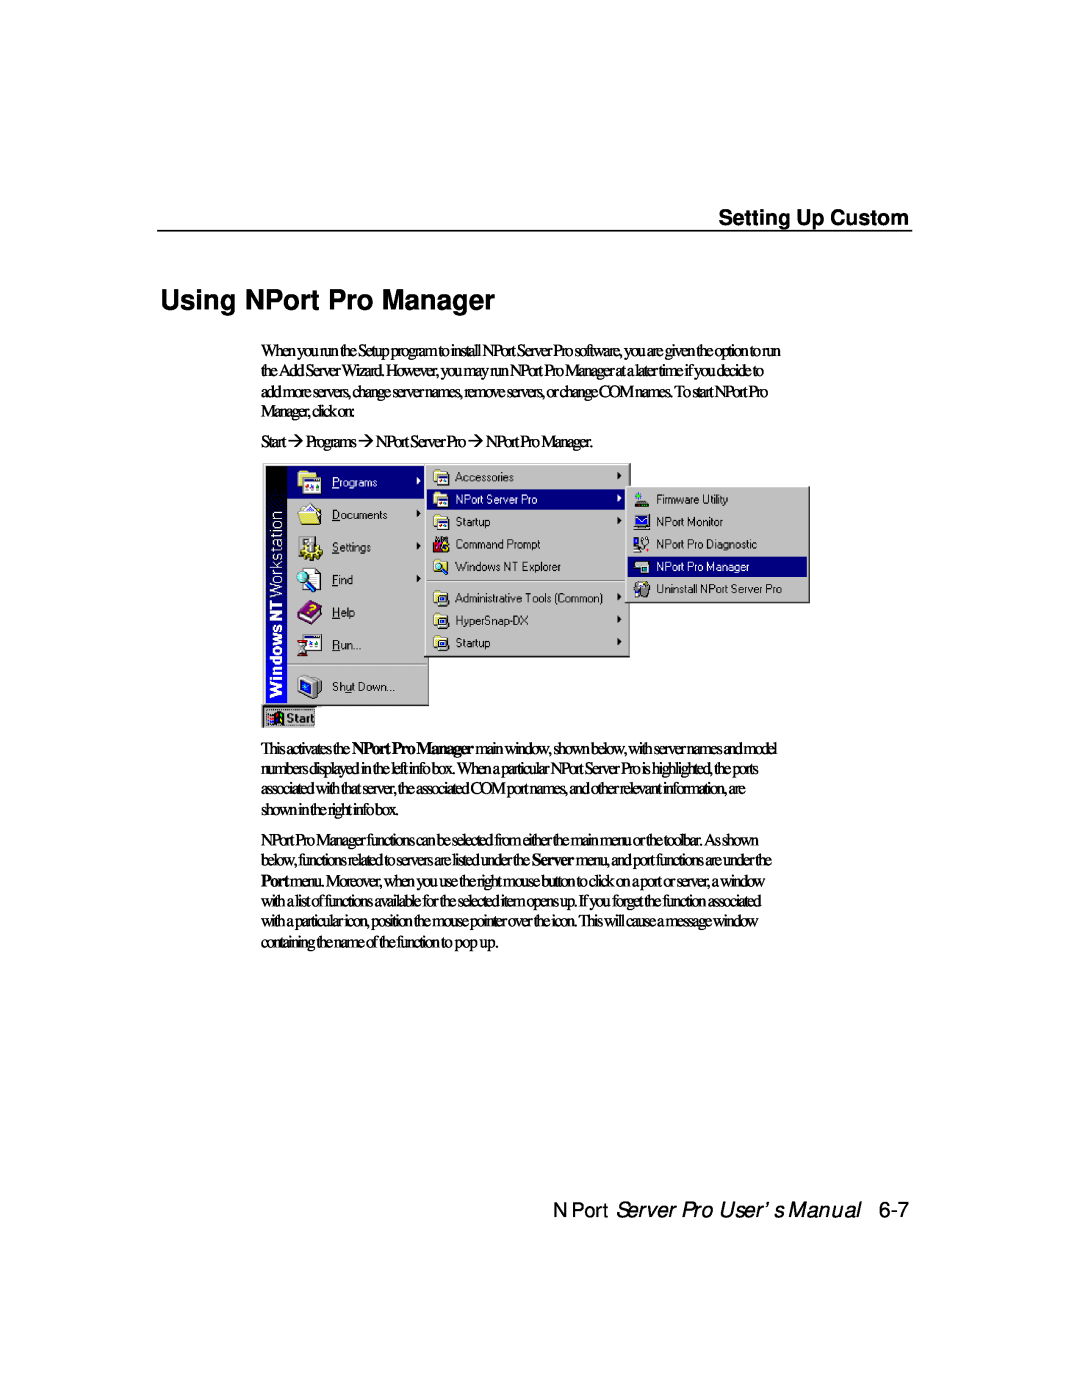 Moxa Technologies DE-308, DE-303 manual Using NPort Pro Manager, Setting Up Custom, NPort Server Pro User’s Manual 